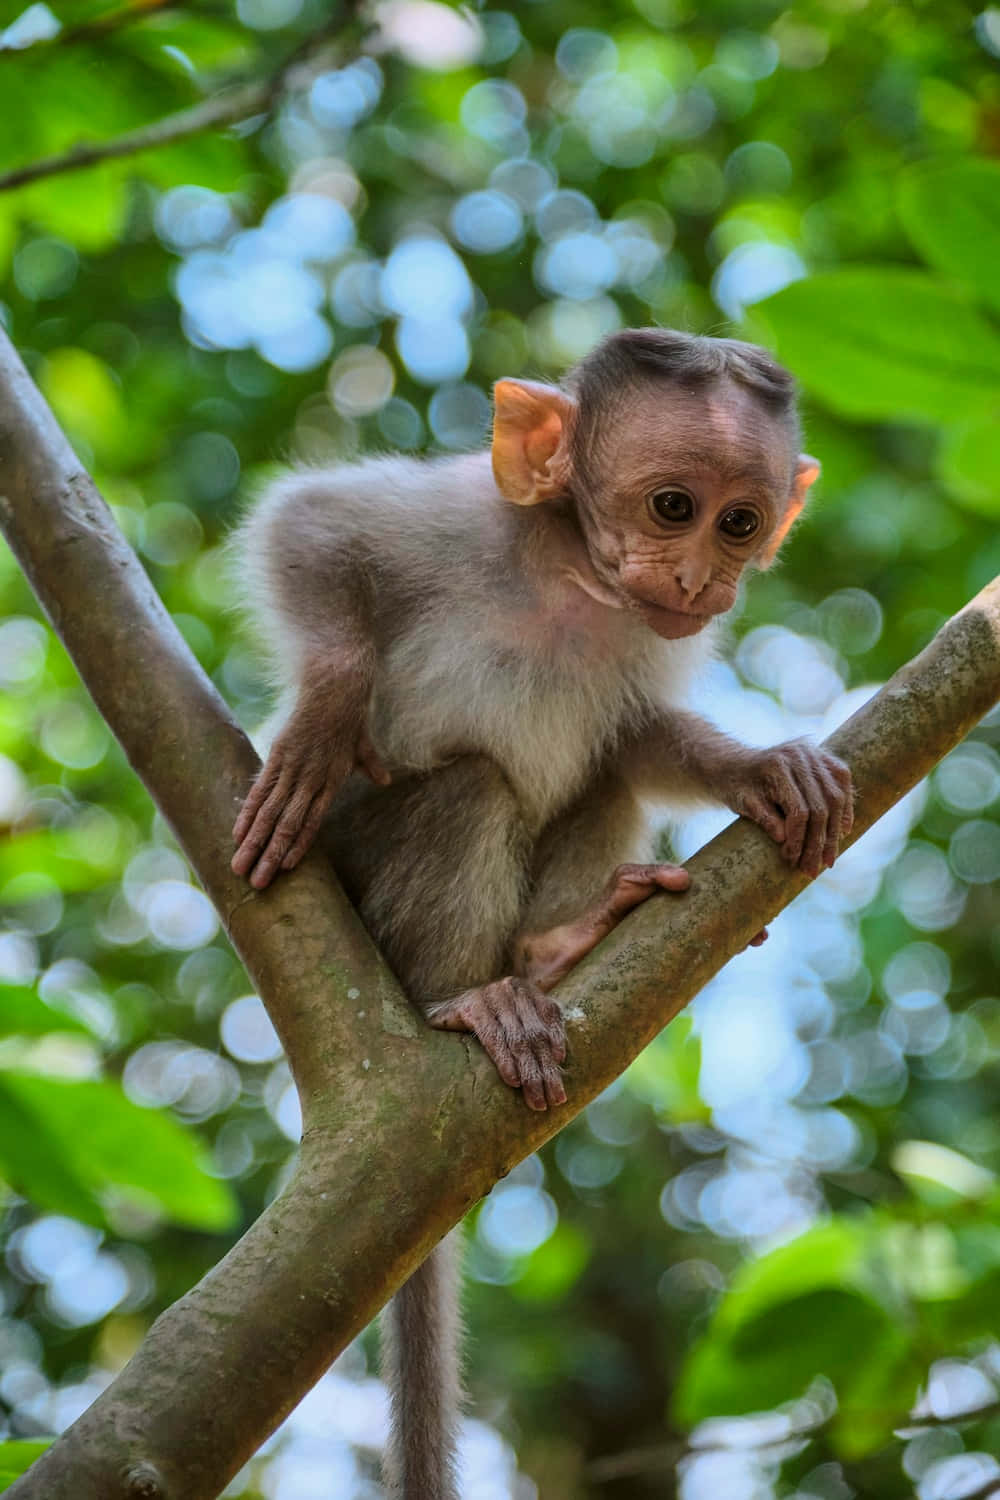 Adorable Baby Monkey Looking Up at Camera